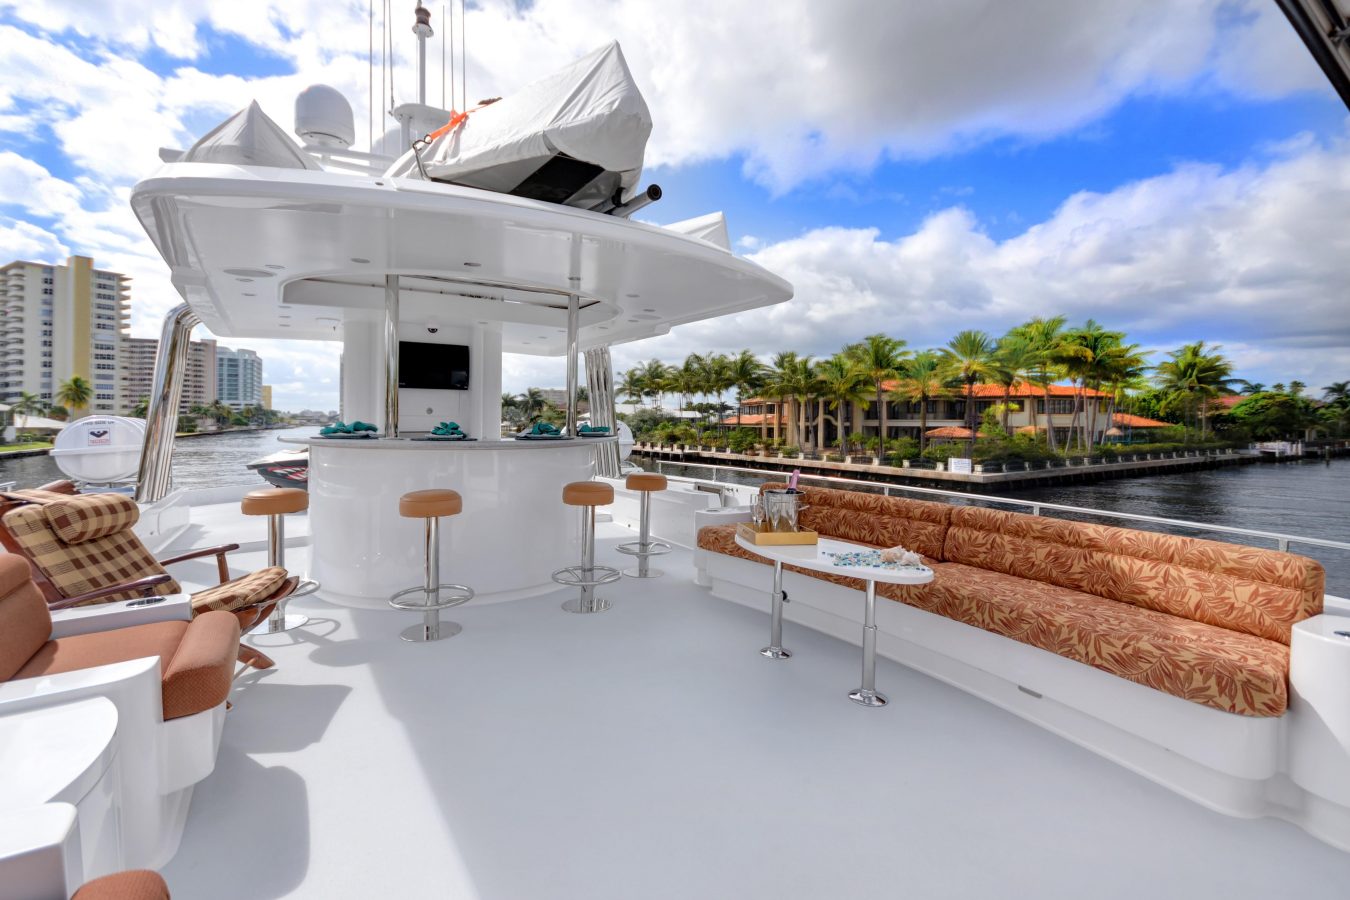 Marbella yacht bridge deck lounge port side view